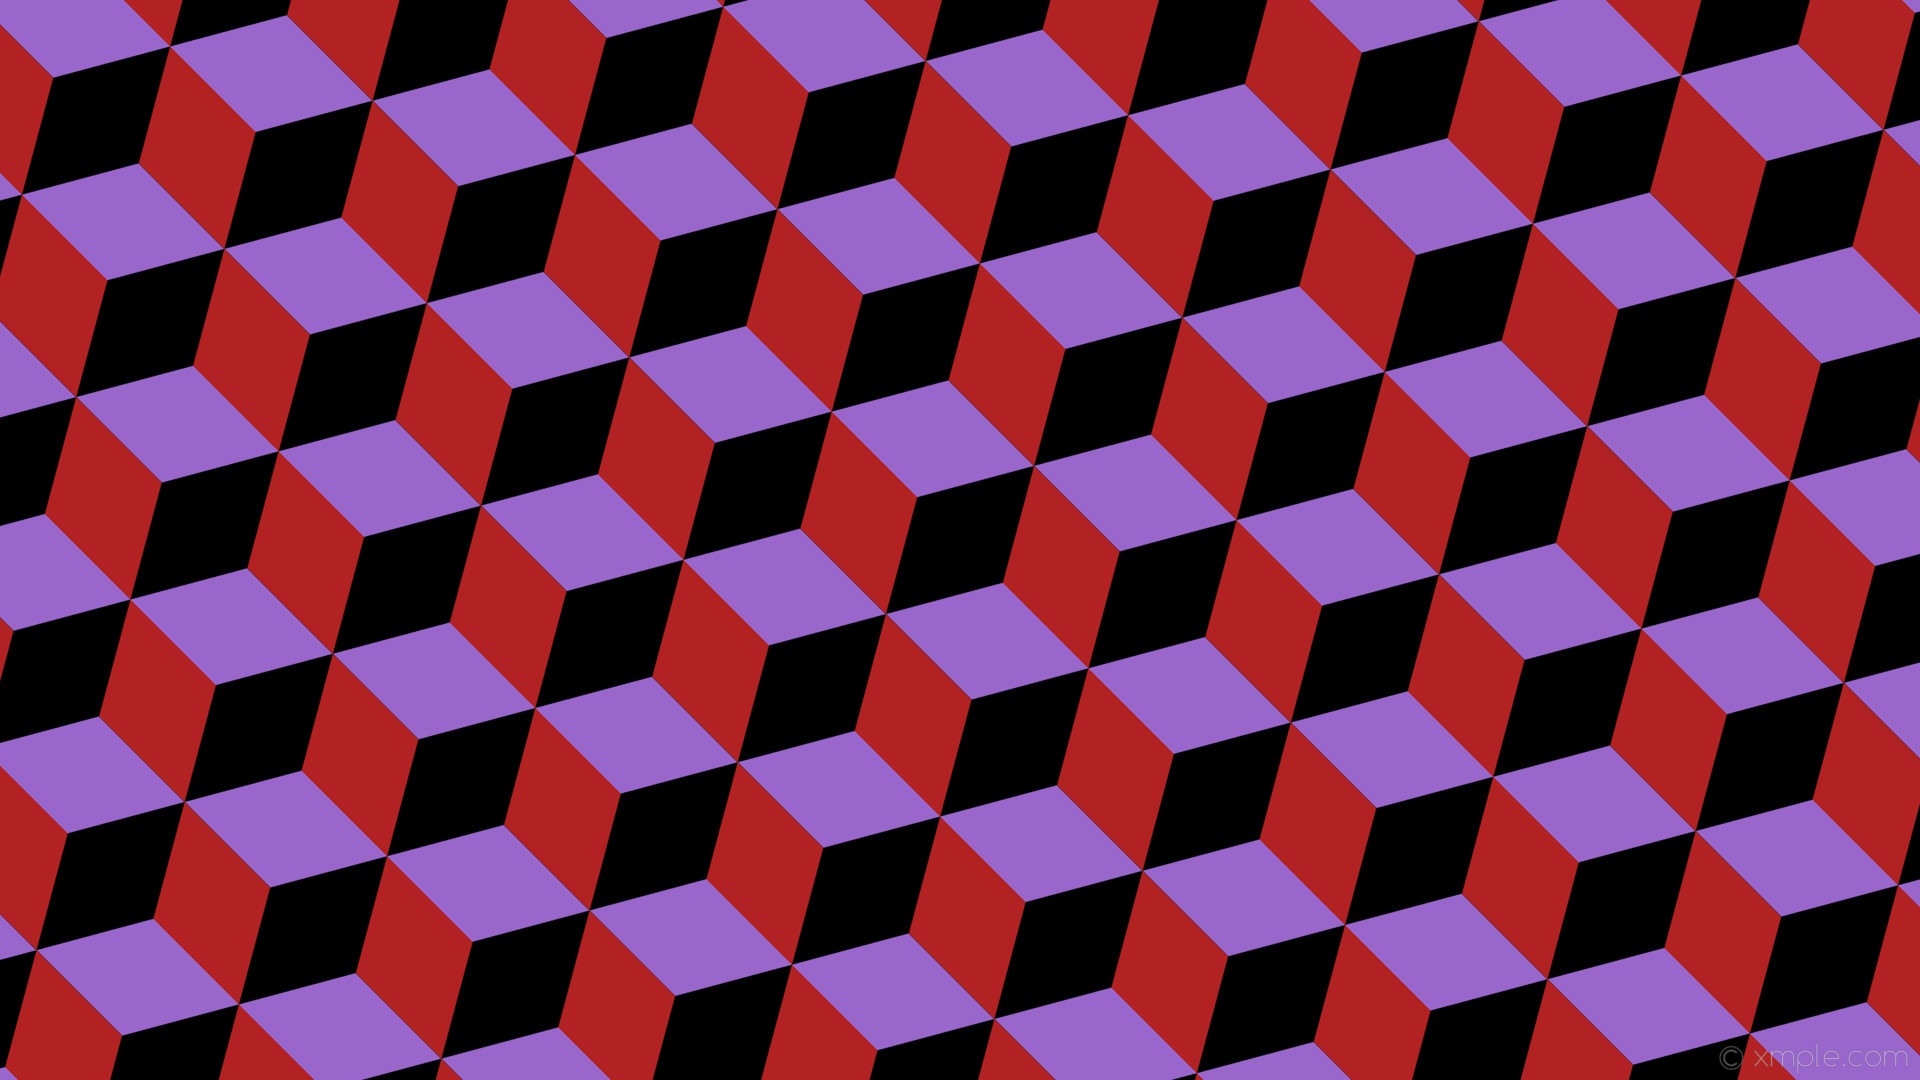 1920x1080 wallpaper red 3d cubes purple black amethyst fire brick #000000 #9966cc  #b22222 45